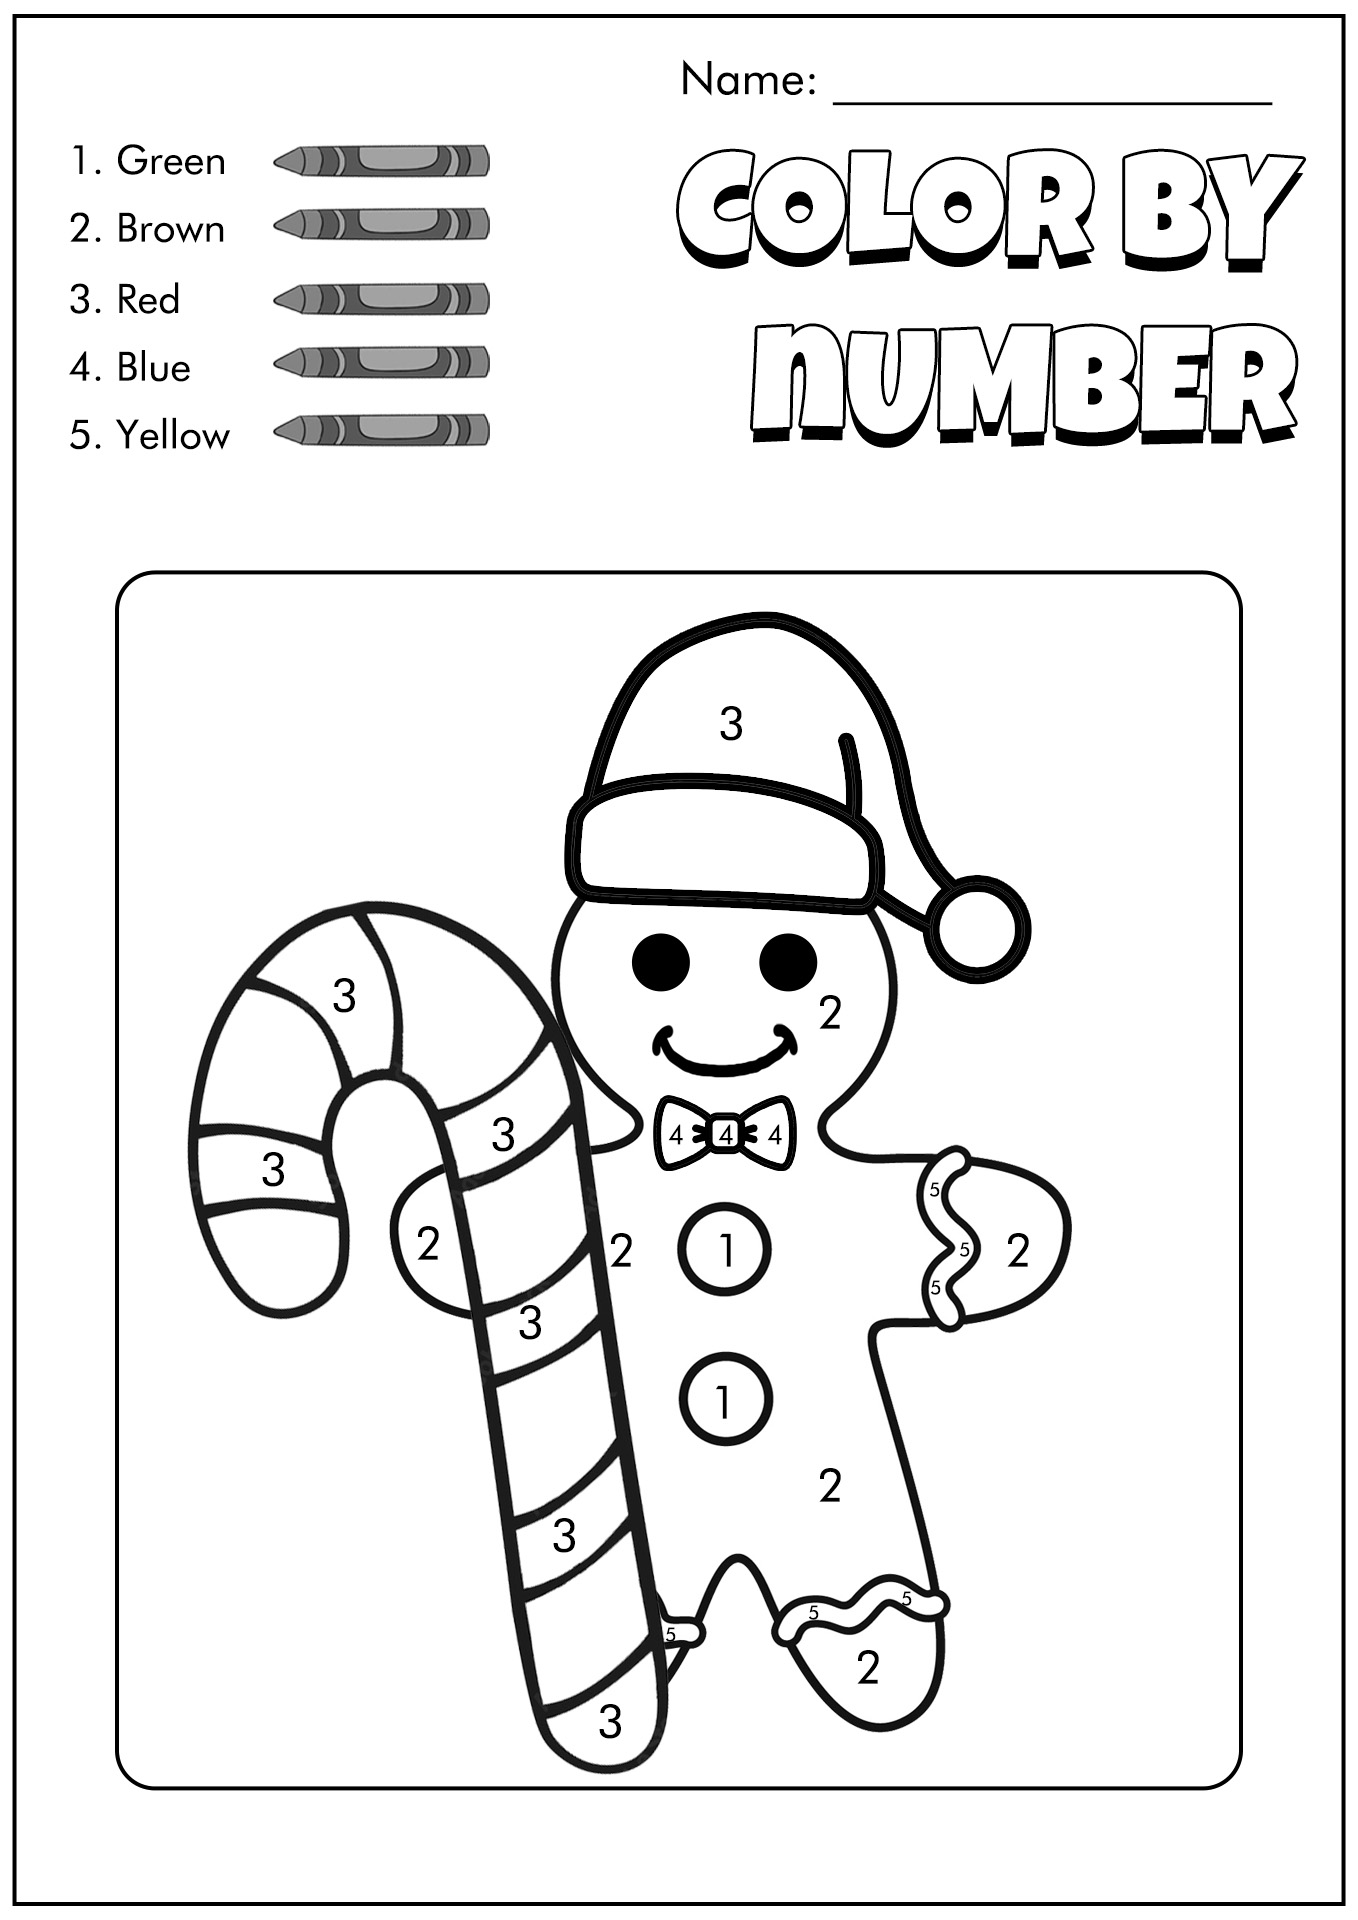 16 Best Images of Christmas Code Worksheet - Christmas ...